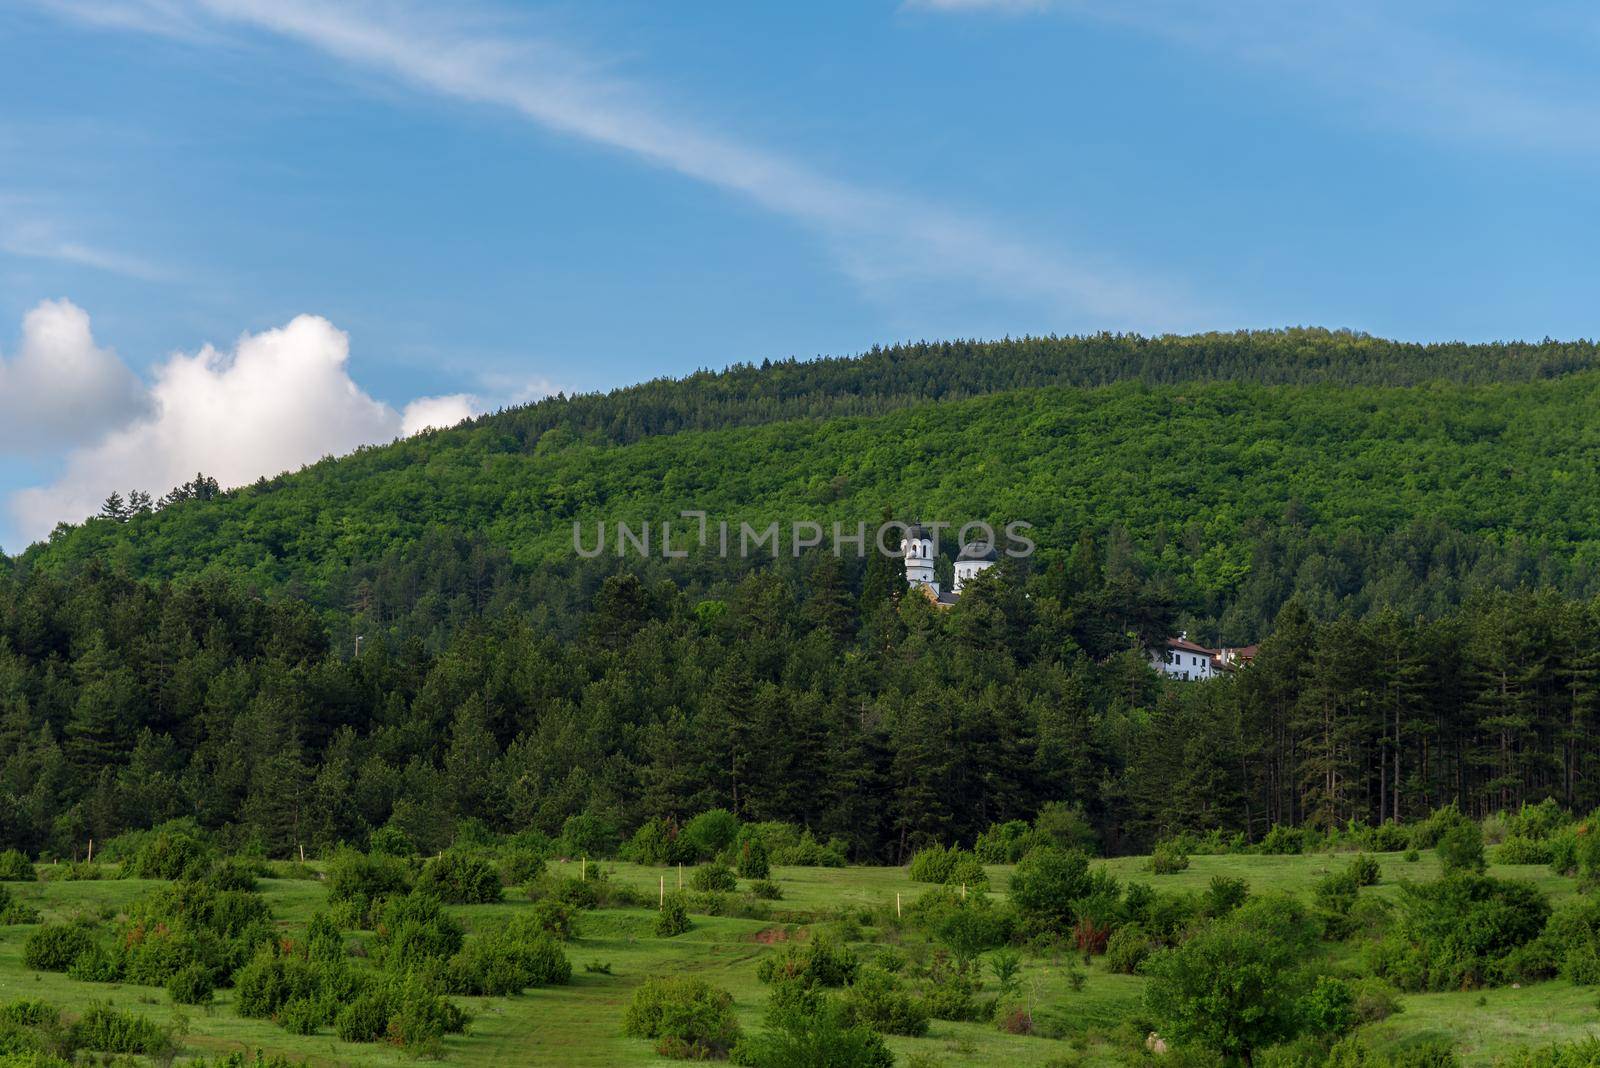 The Kremikovtsi Monastery of Saint George in bulgaria